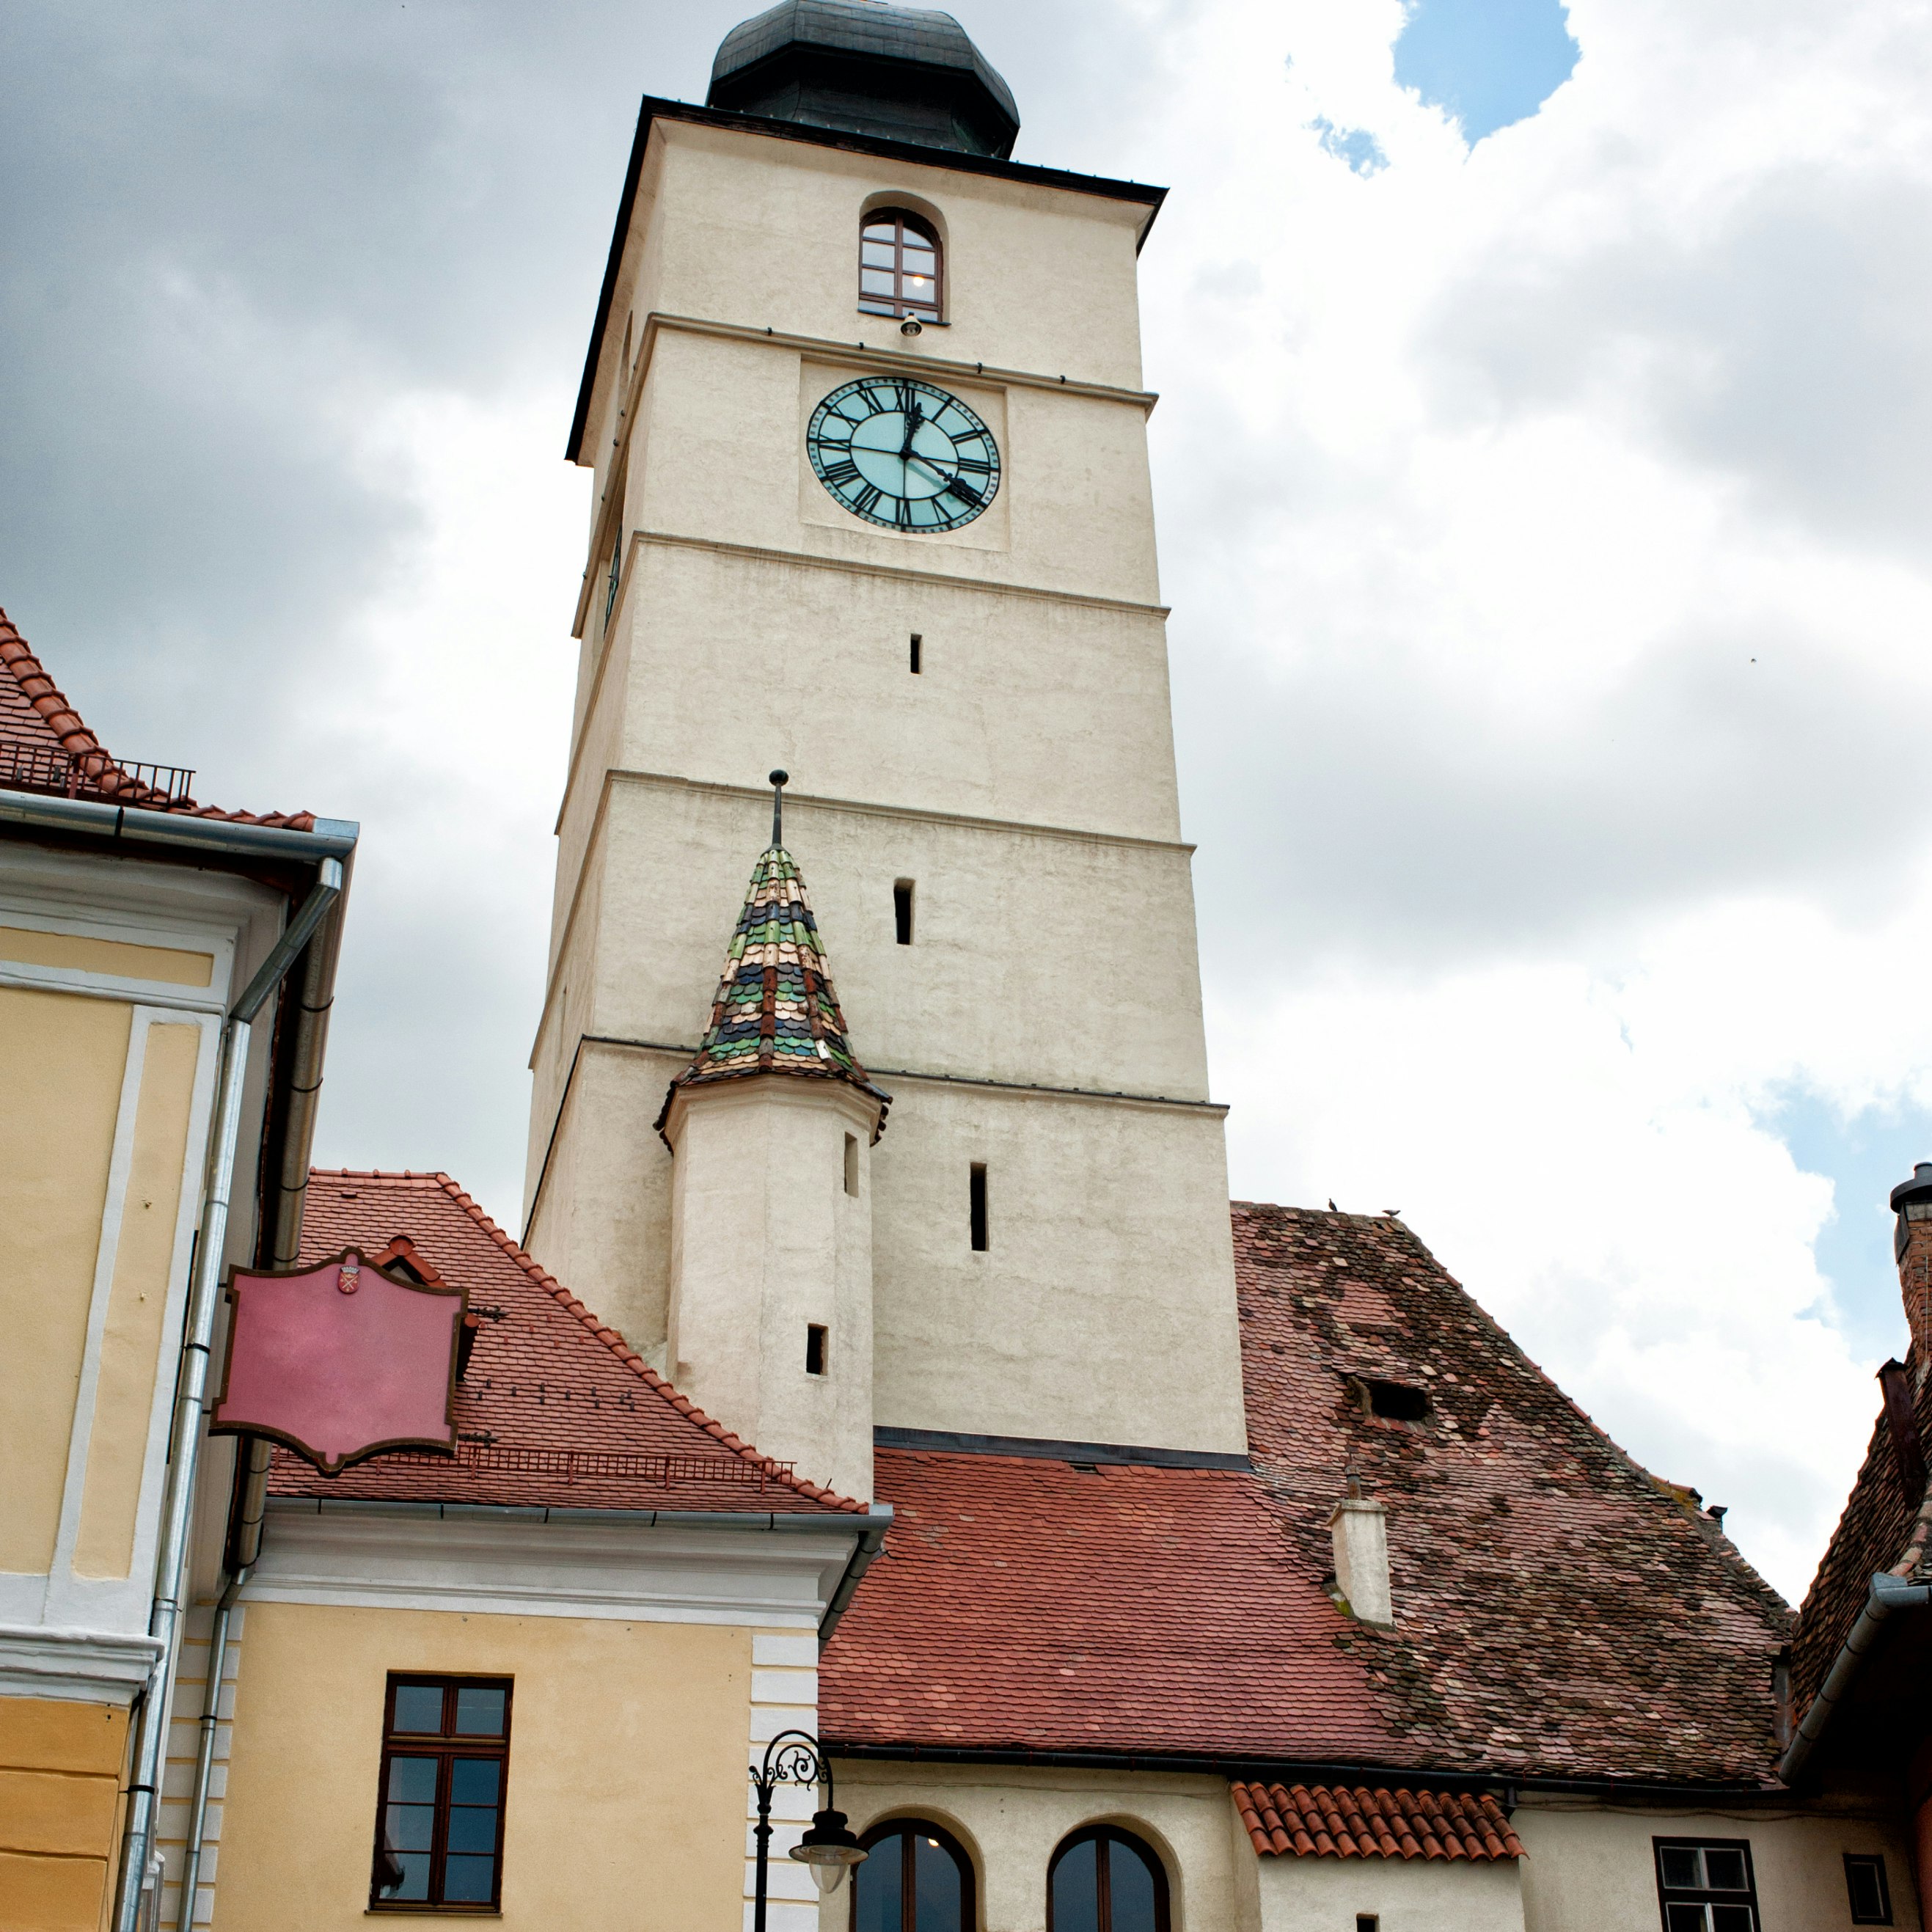 Council Tower Sibiu.